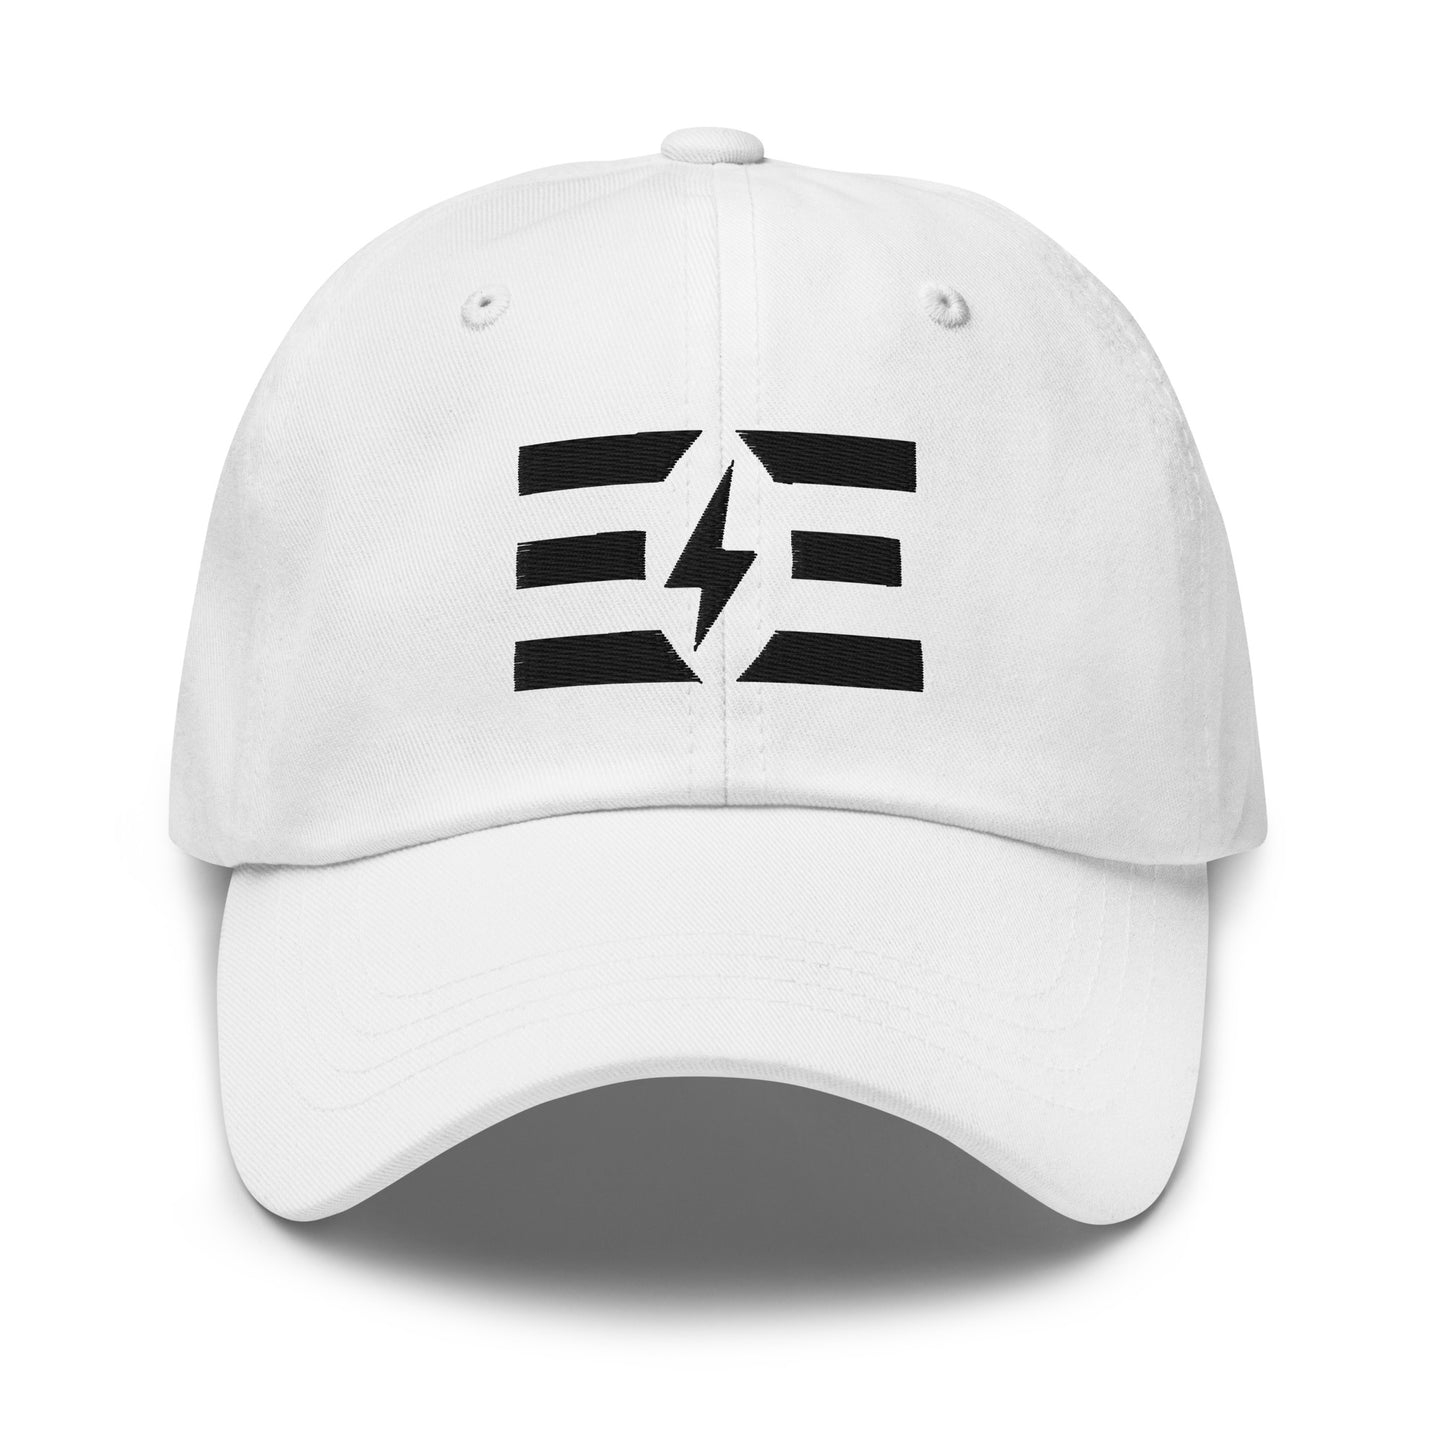 Endurance eSports Dad hat - Black